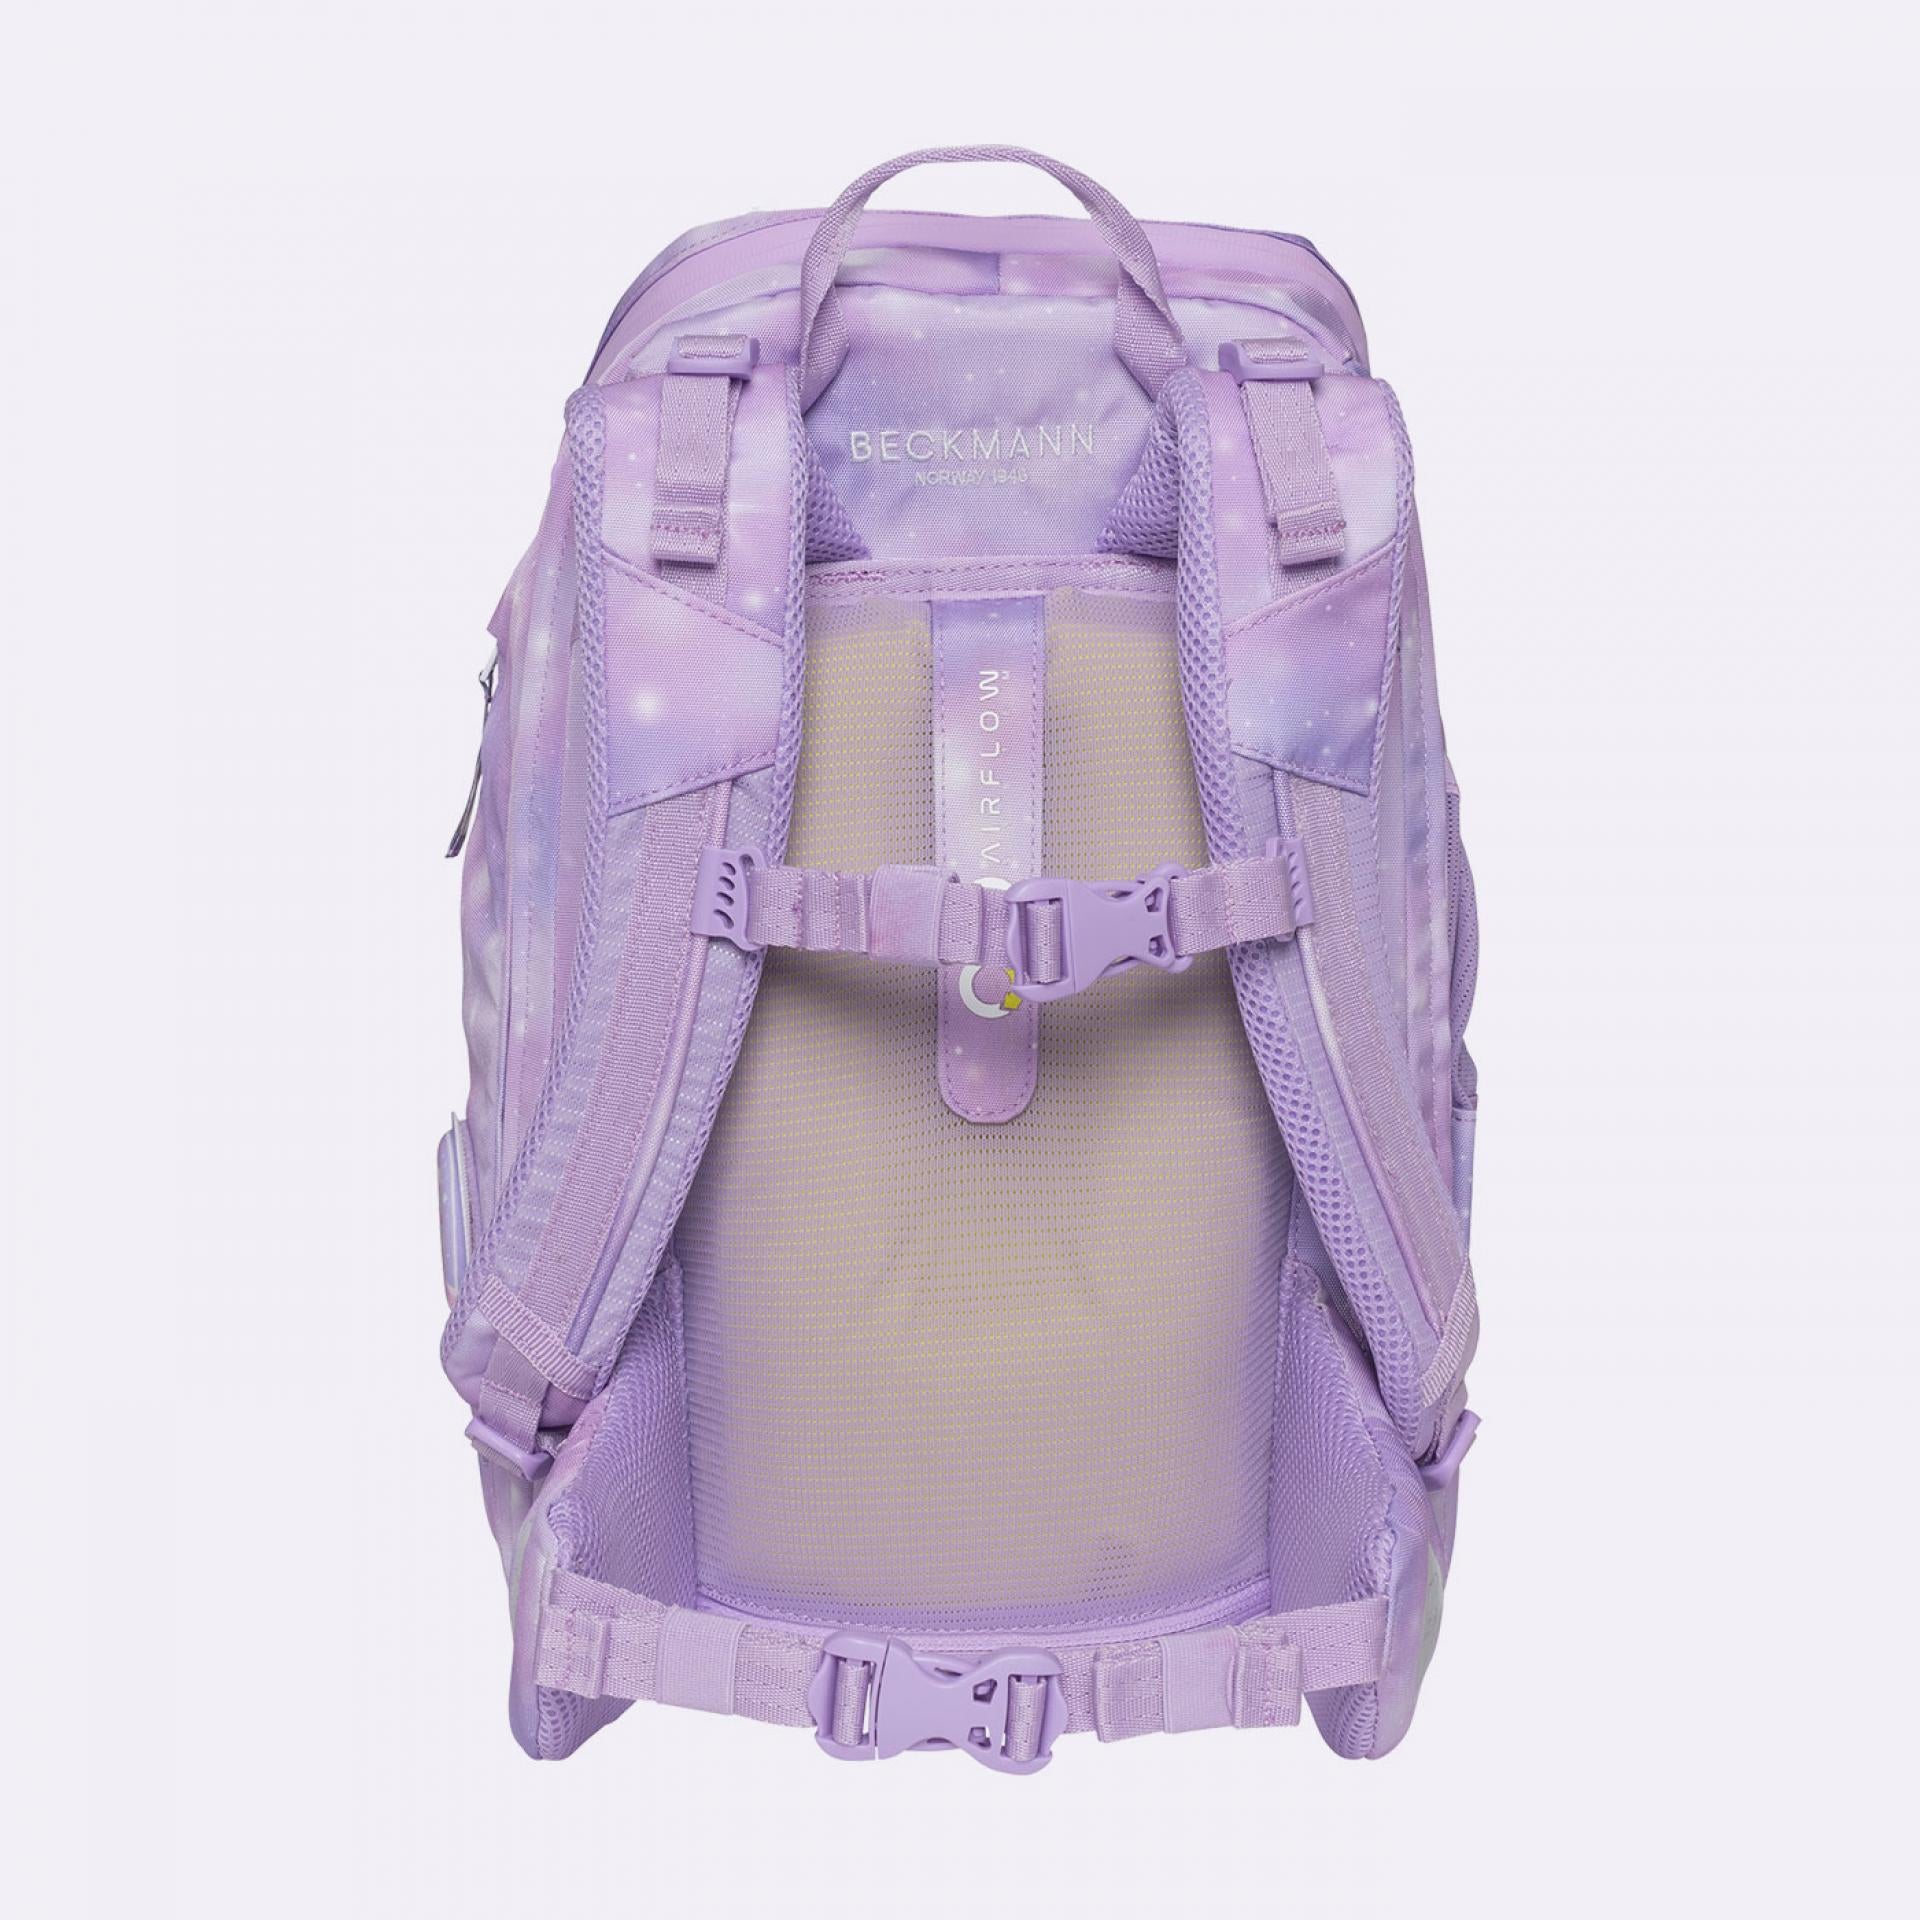 Beckmann  Schulrucksack-Set  Active Air FLX  Candy purple